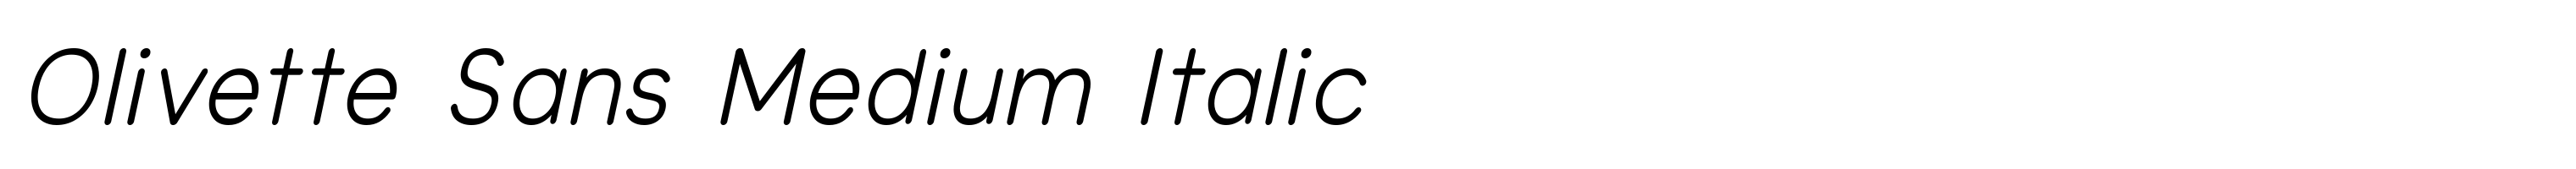 Olivette Sans Medium Italic